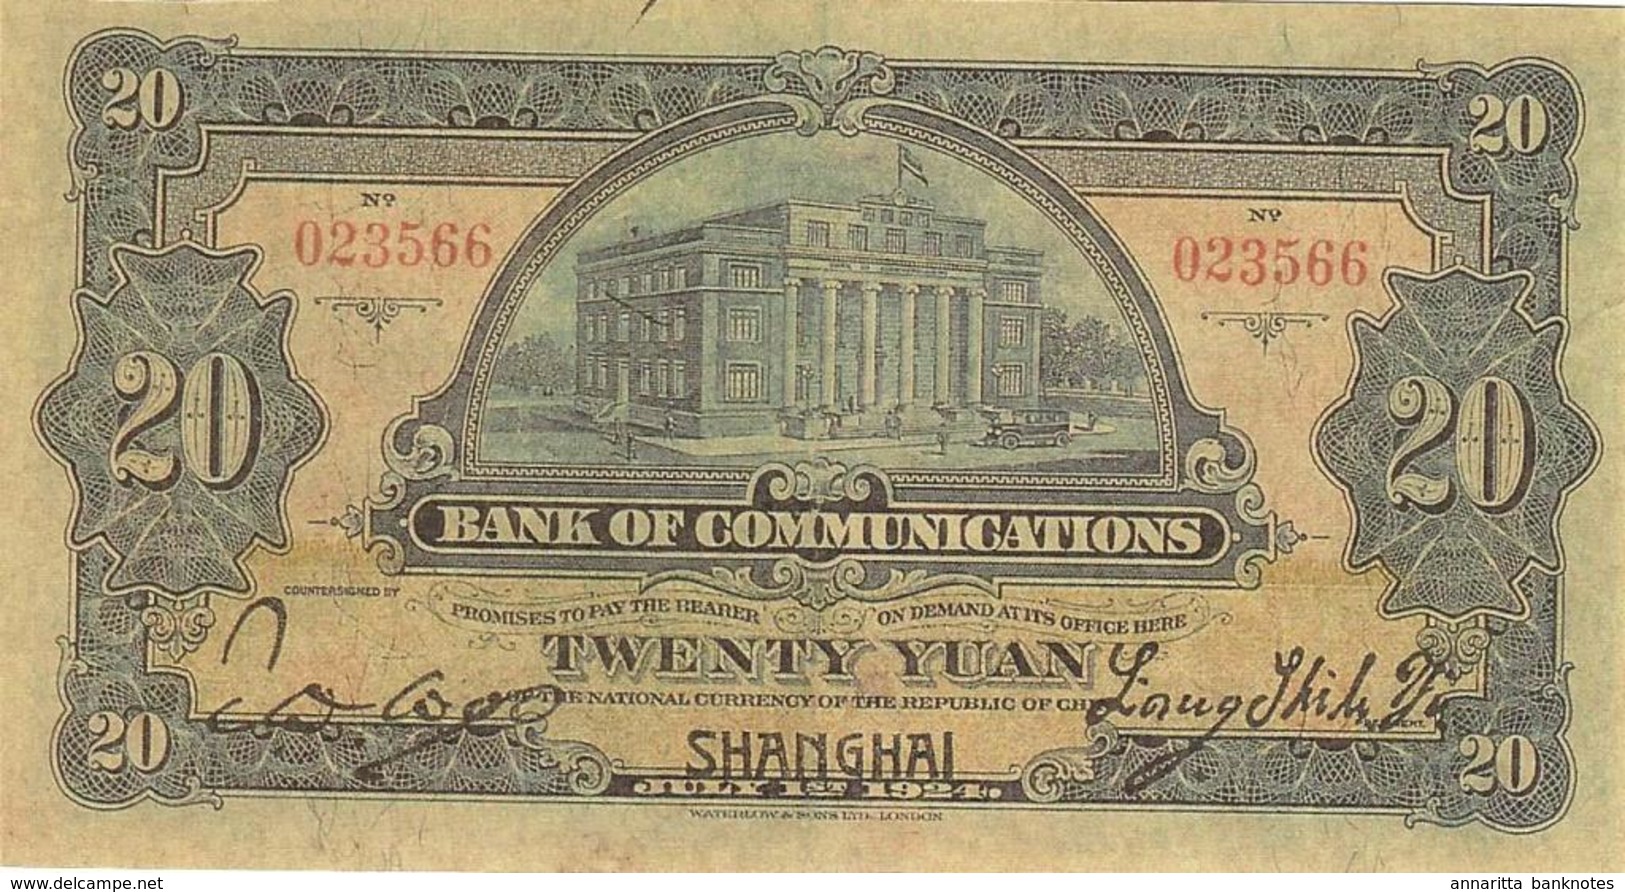 CHINA (REPUBLIC) BANK OF COMMUNICATIONS 20 YUAN 1924 P-137 UNC REPLICA - China